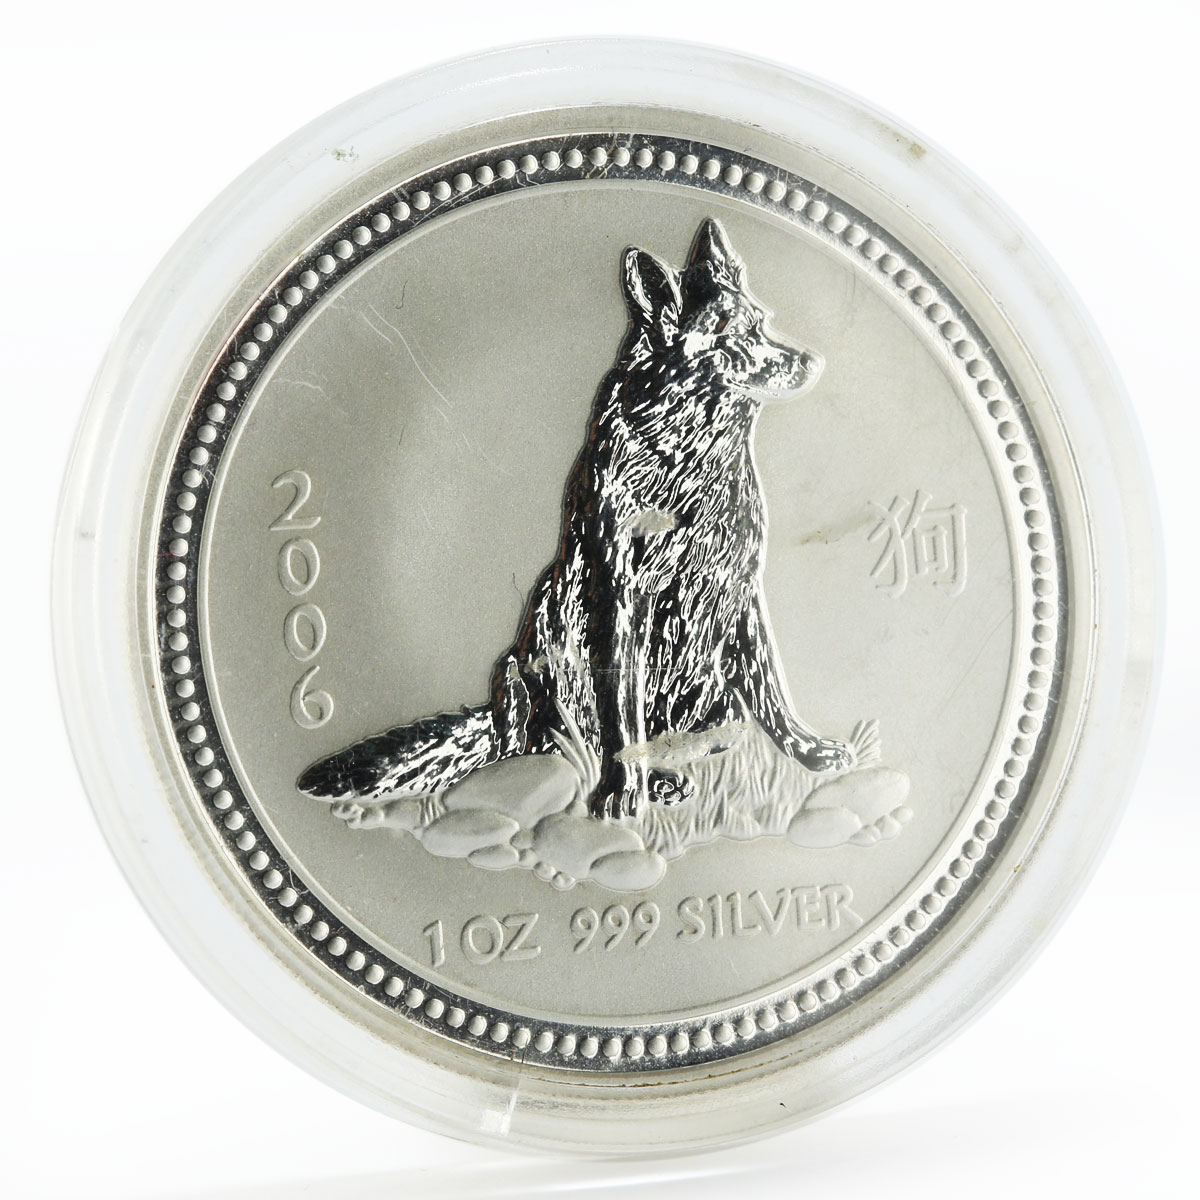 Australia 1 dollars Year of the Dog Lunar Series I silver coin 1oz 2006